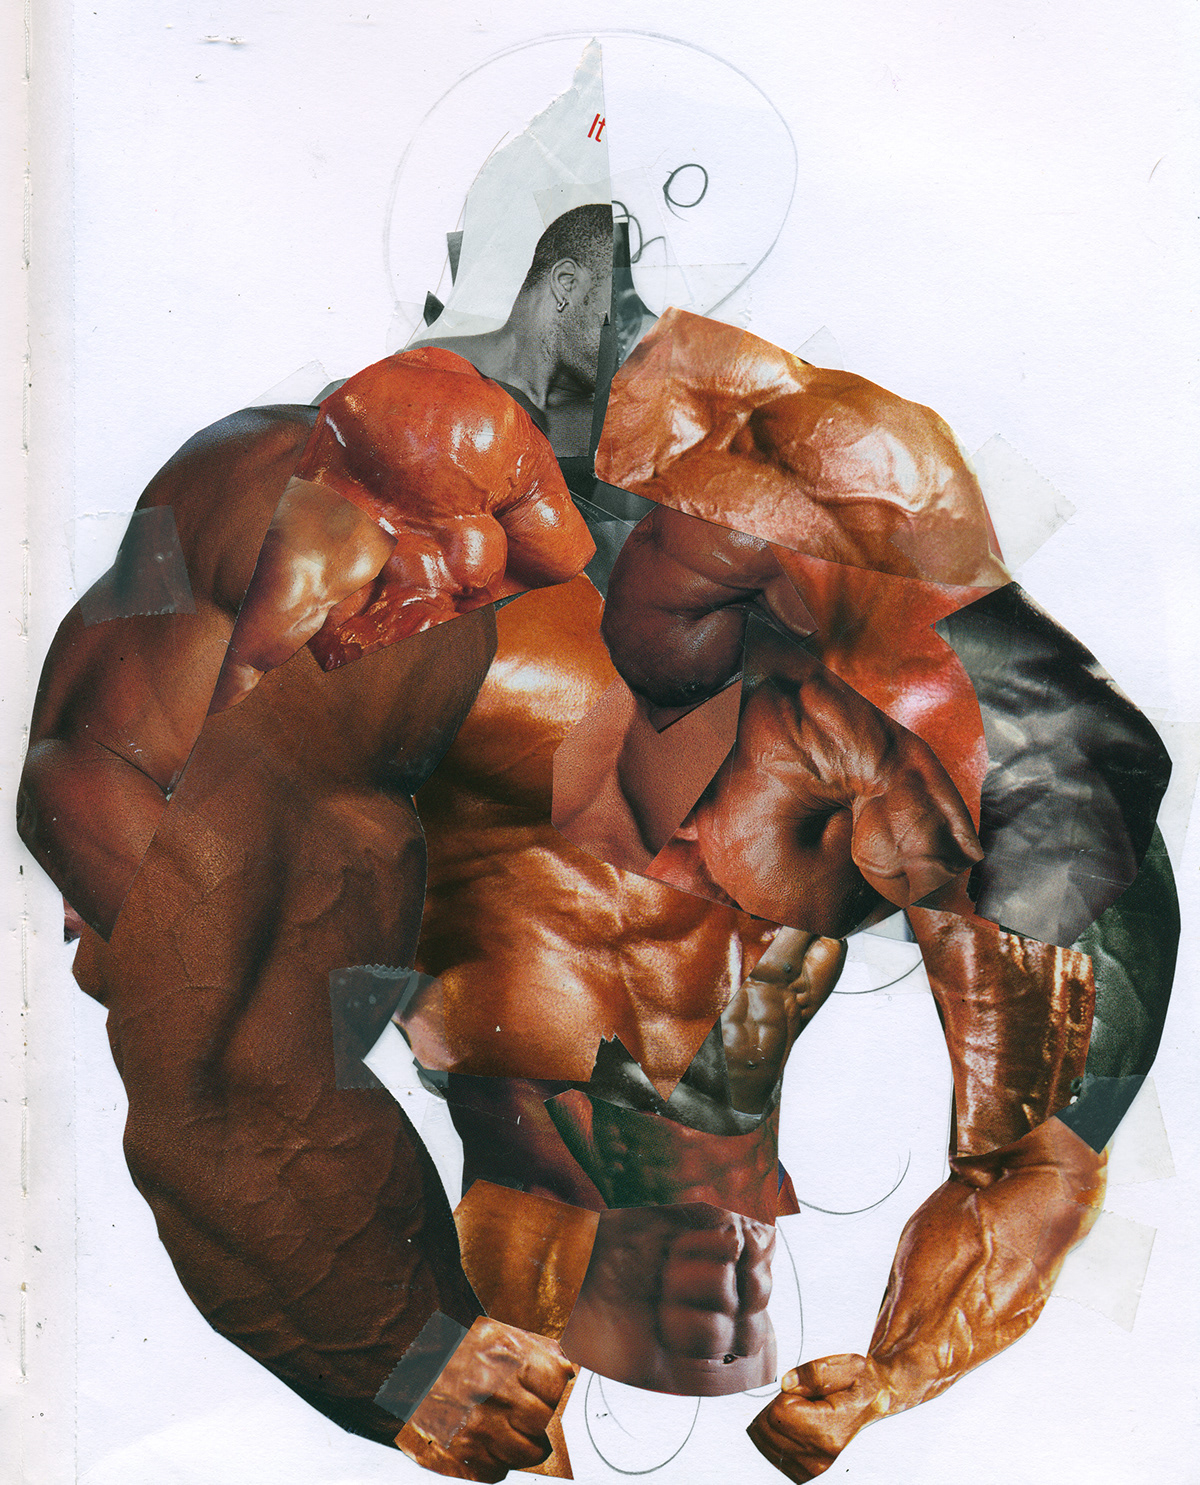 CHARLES ATLAS heman Hulk marvelcomics muscleman strongman muscle superhuman SuperHero comics collage Xmen